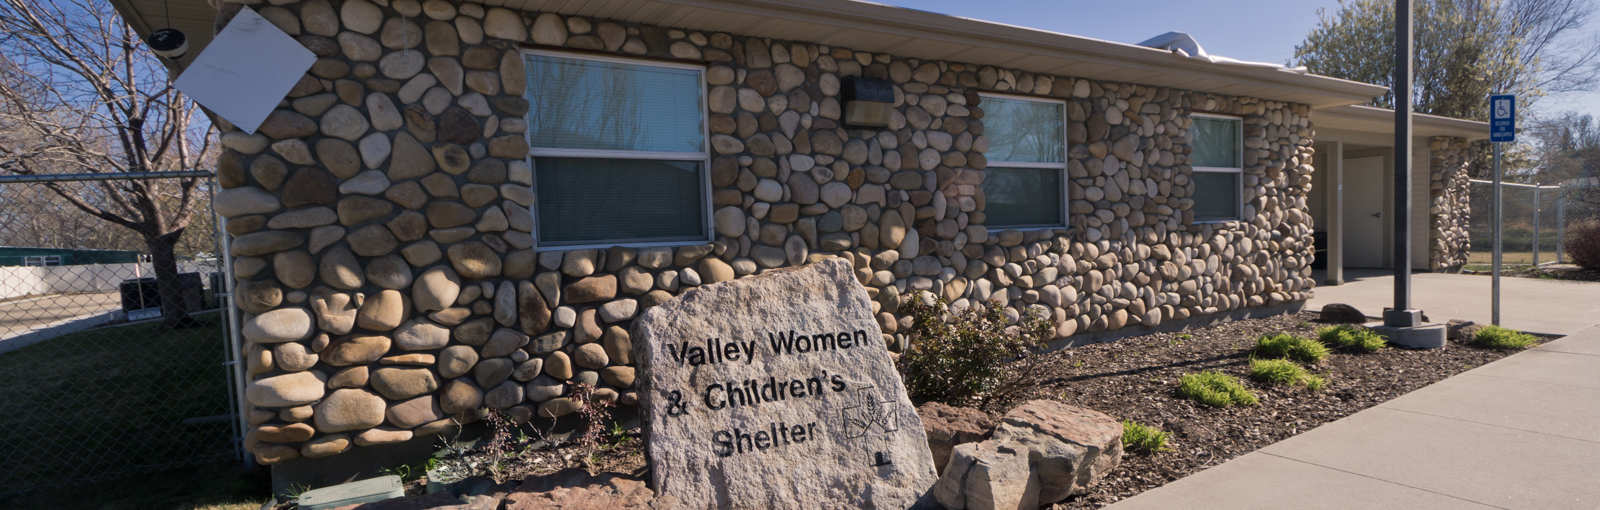 Valley Women & Children's Shelter in Nampa, ID